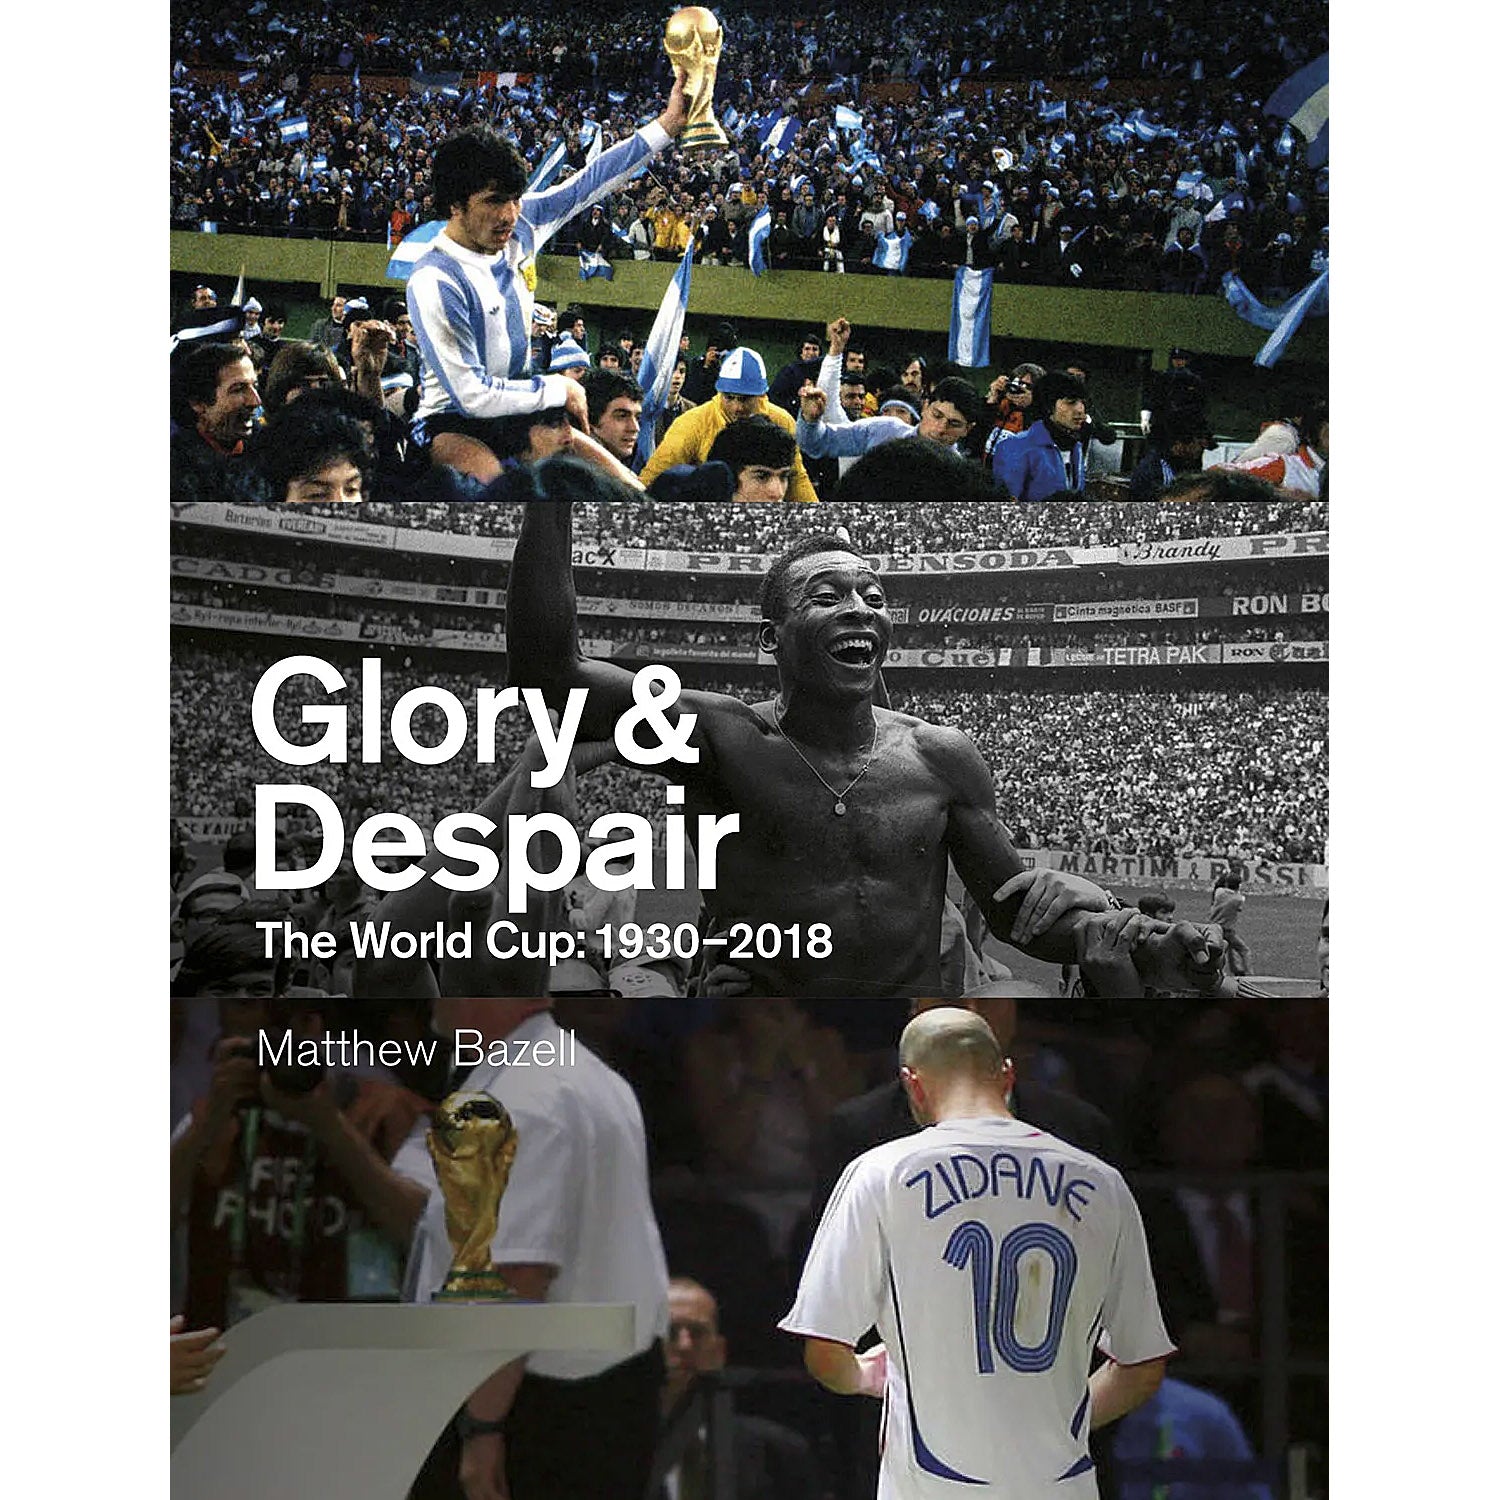 Glory & Despair – The World Cup: 1930-2018